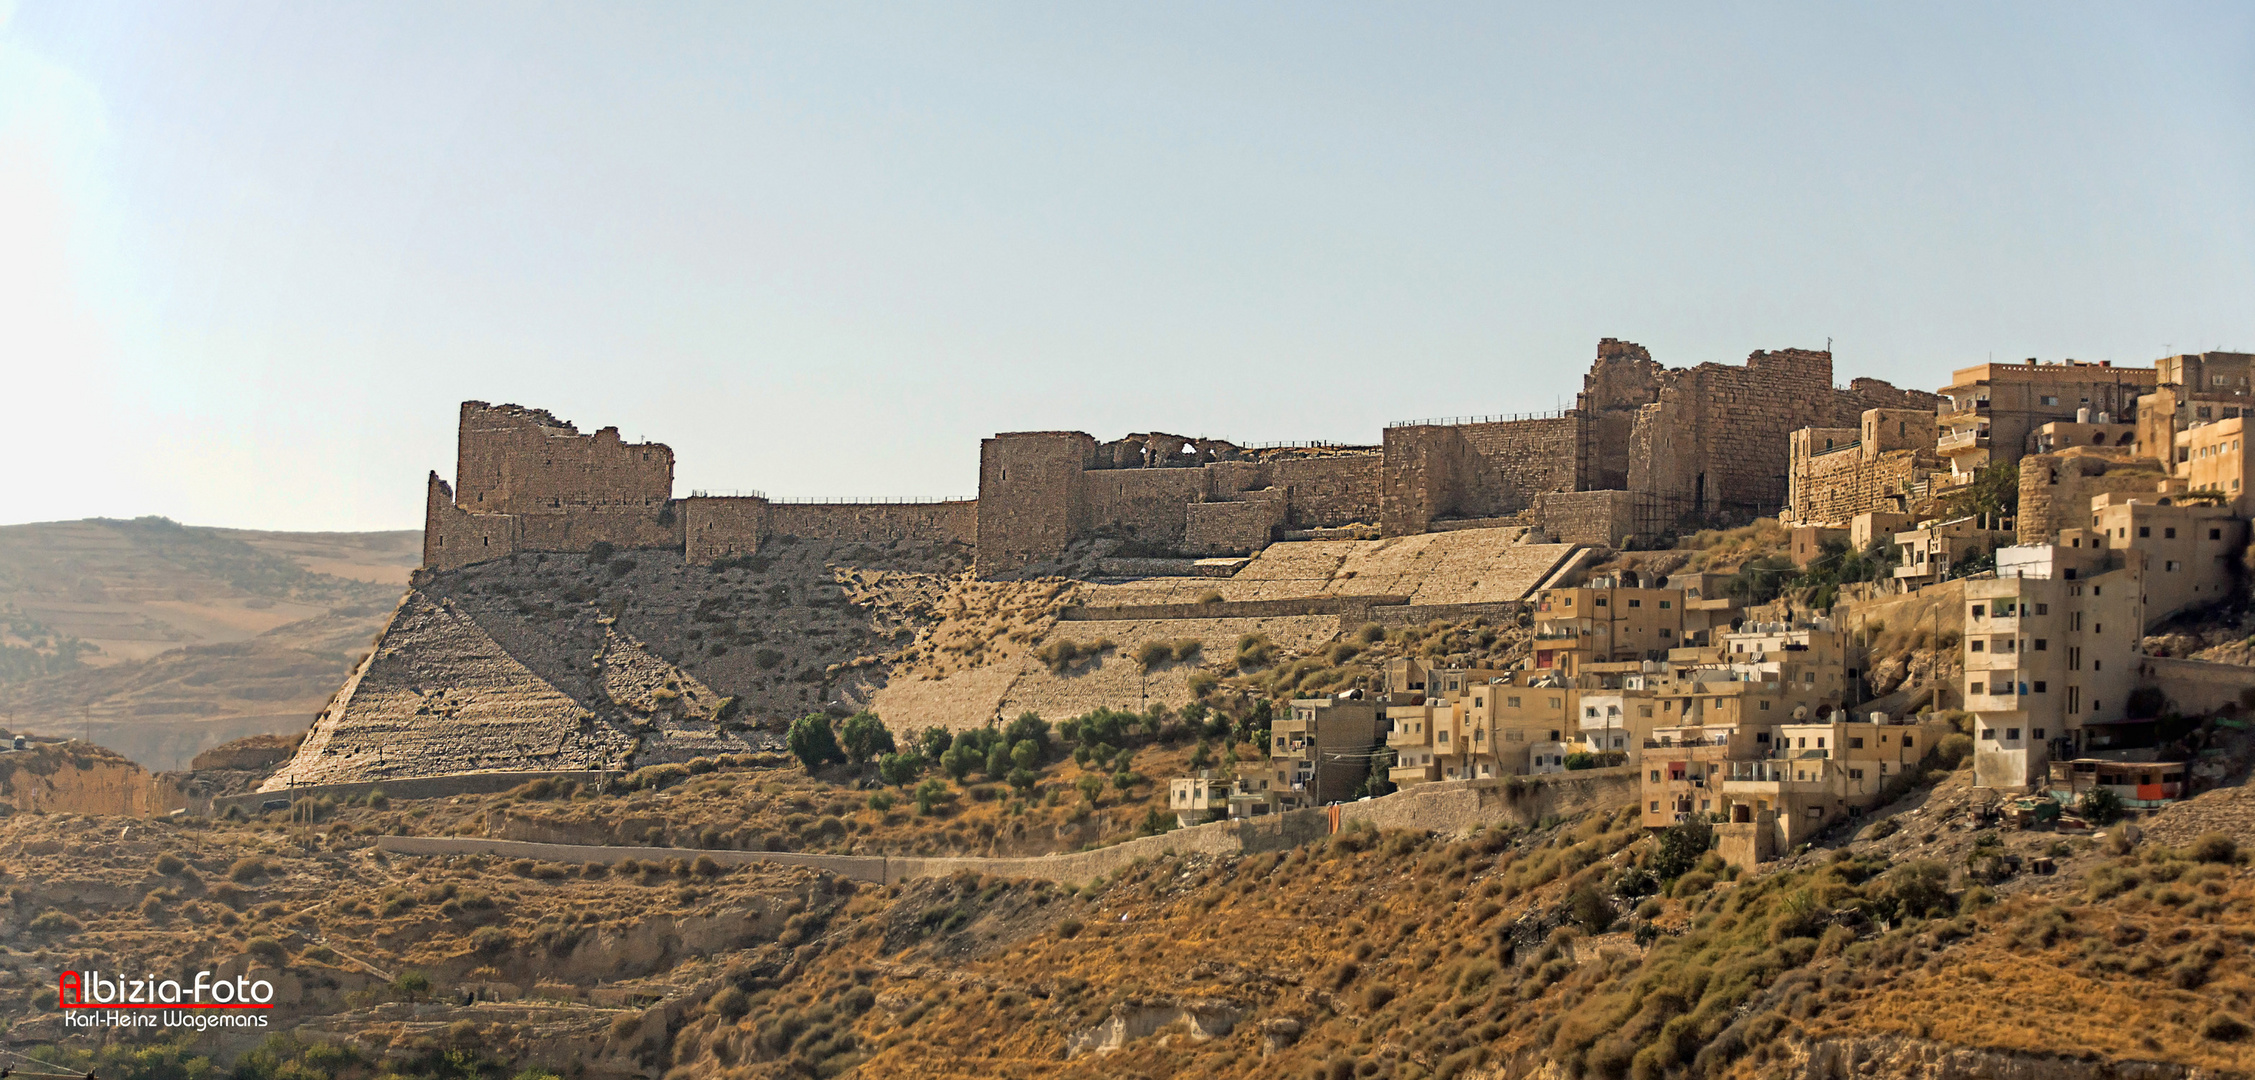 Die Ruinen der Festung Kerak (Karak) in Jordanien